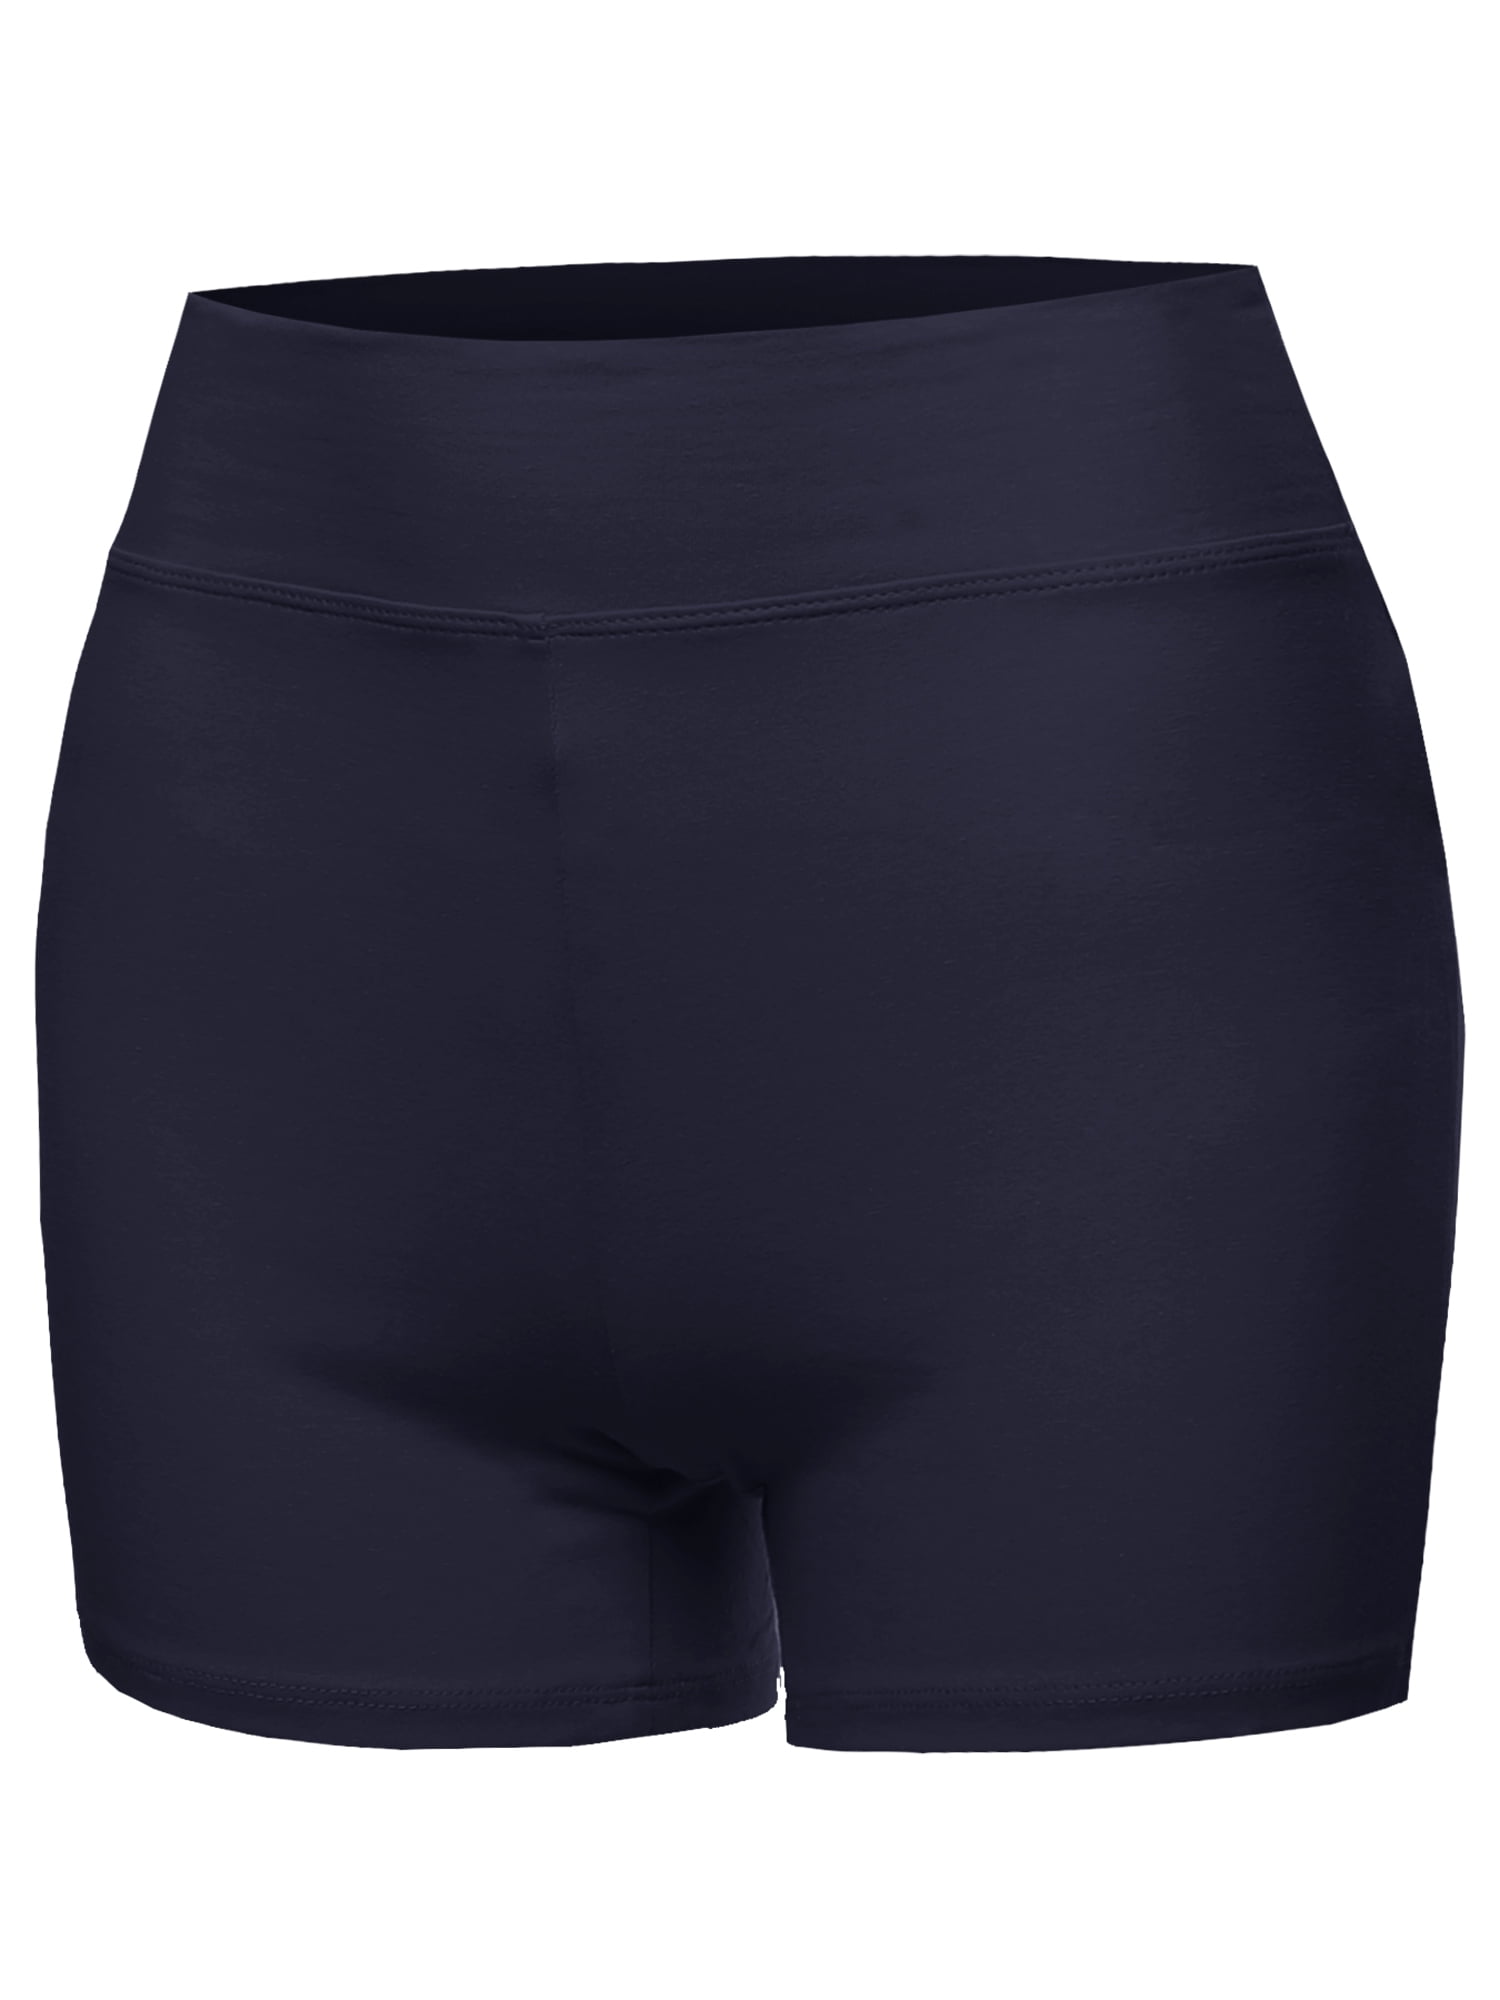 A2Y Women's Basic Solid Premium Cotton High Rise Bike Shorts Navy 3XL ...